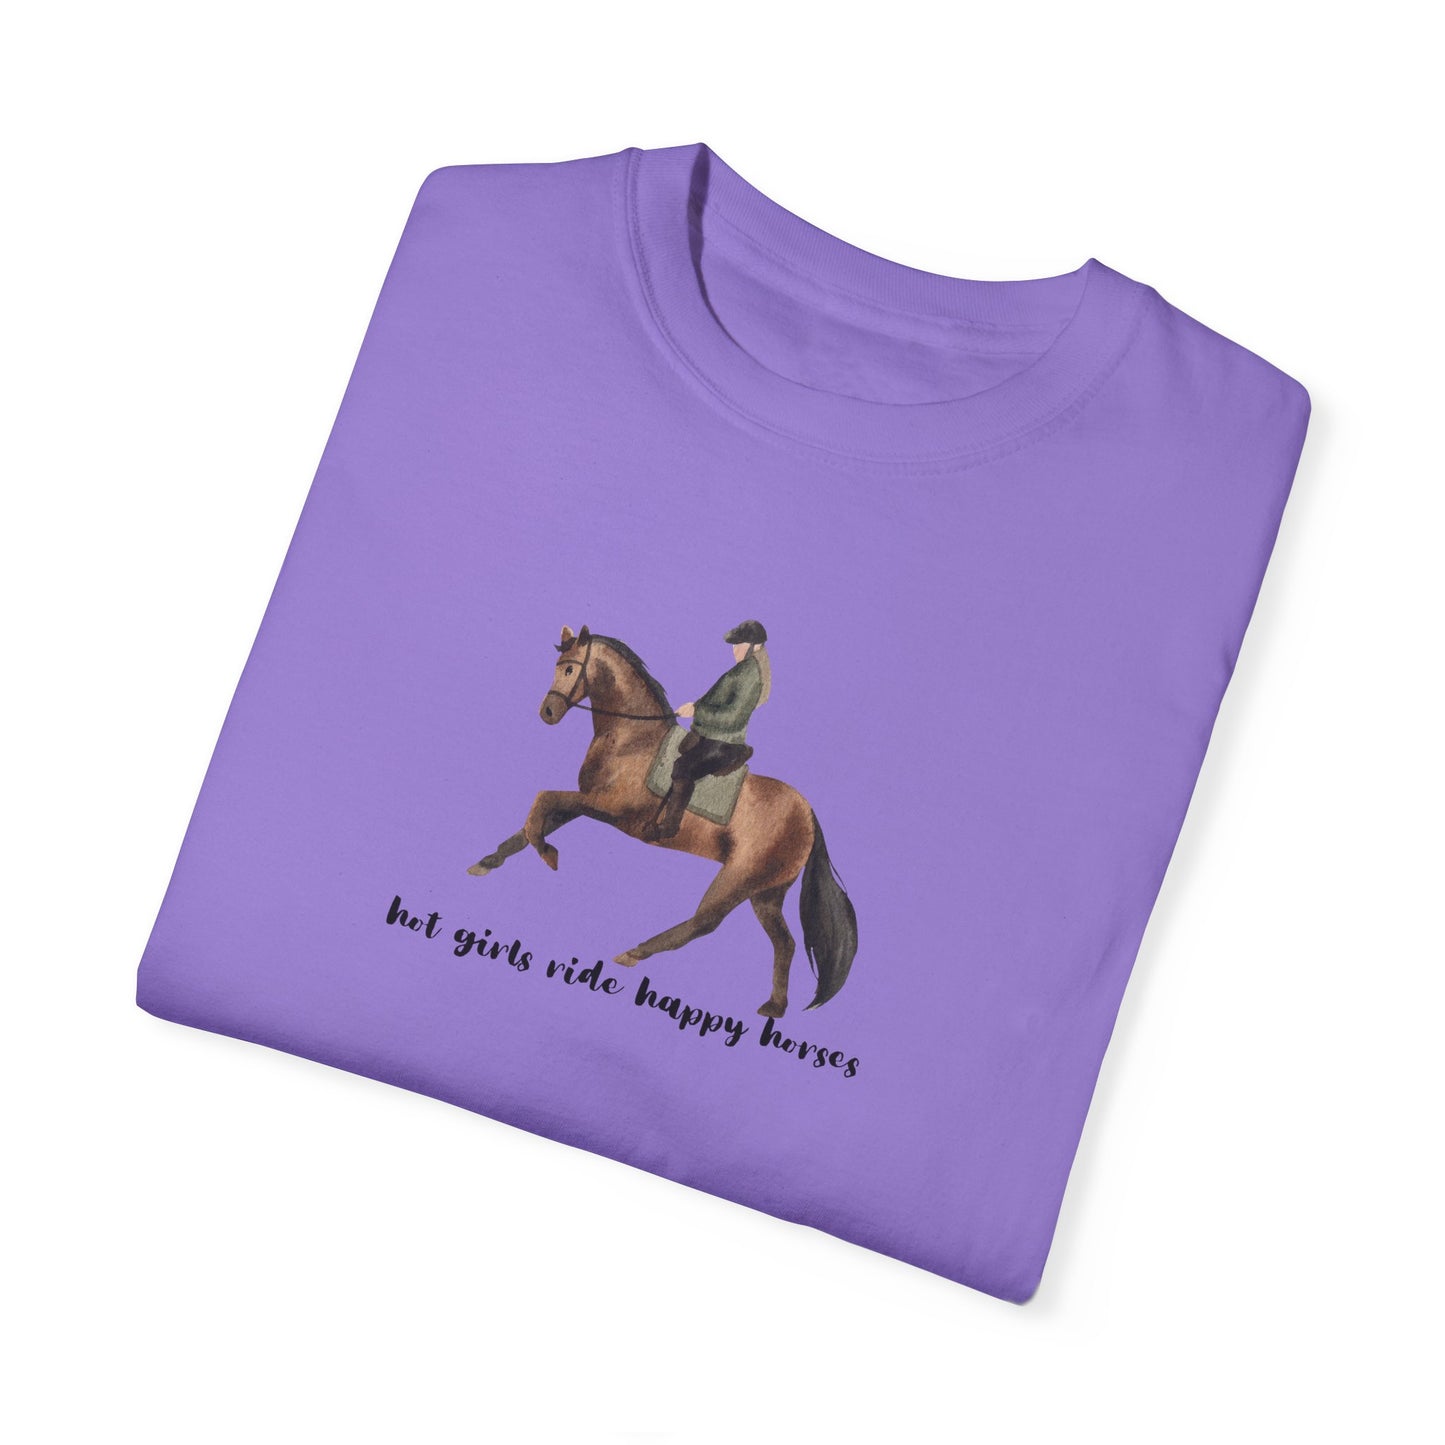 Hot Girls Ride Happy Horses (Dressage) T-shirt